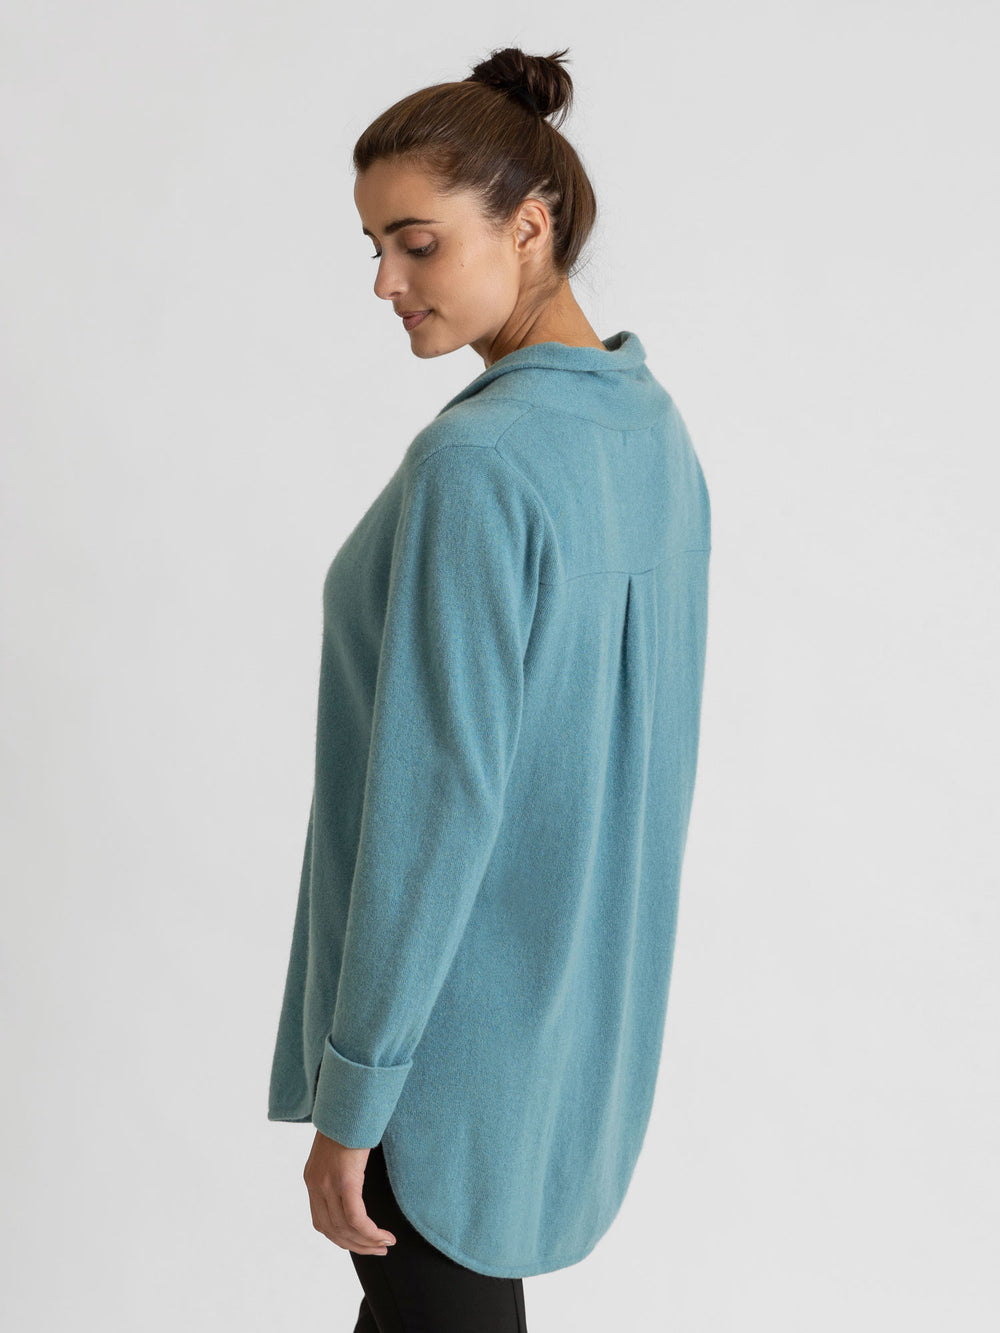 cashmere sweater big shirt in 100% cashmere by Kashmina